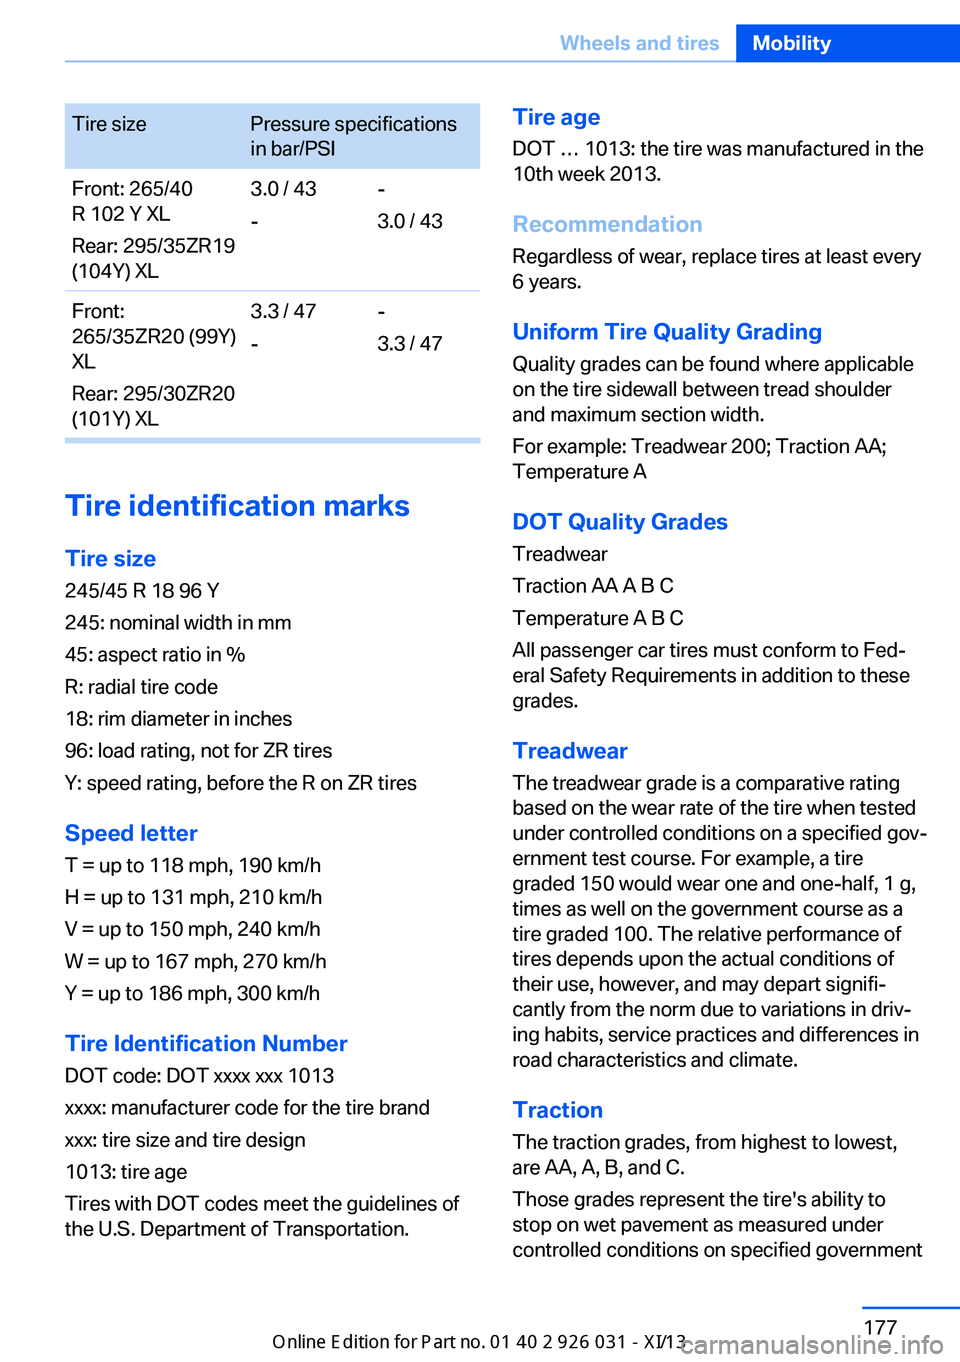 BMW M5 SEDAN 2013  Owners Manual Tire sizePressure specifications
in bar/PSIFront: 265/40
R 102 Y XL
Rear: 295/35ZR19
(104Y) XL3.0 / 43
--
3.0 / 43Front:
265/35ZR20 (99Y)
XL
Rear: 295/30ZR20
(101Y) XL3.3 / 47
--
3.3 / 47
Tire identif